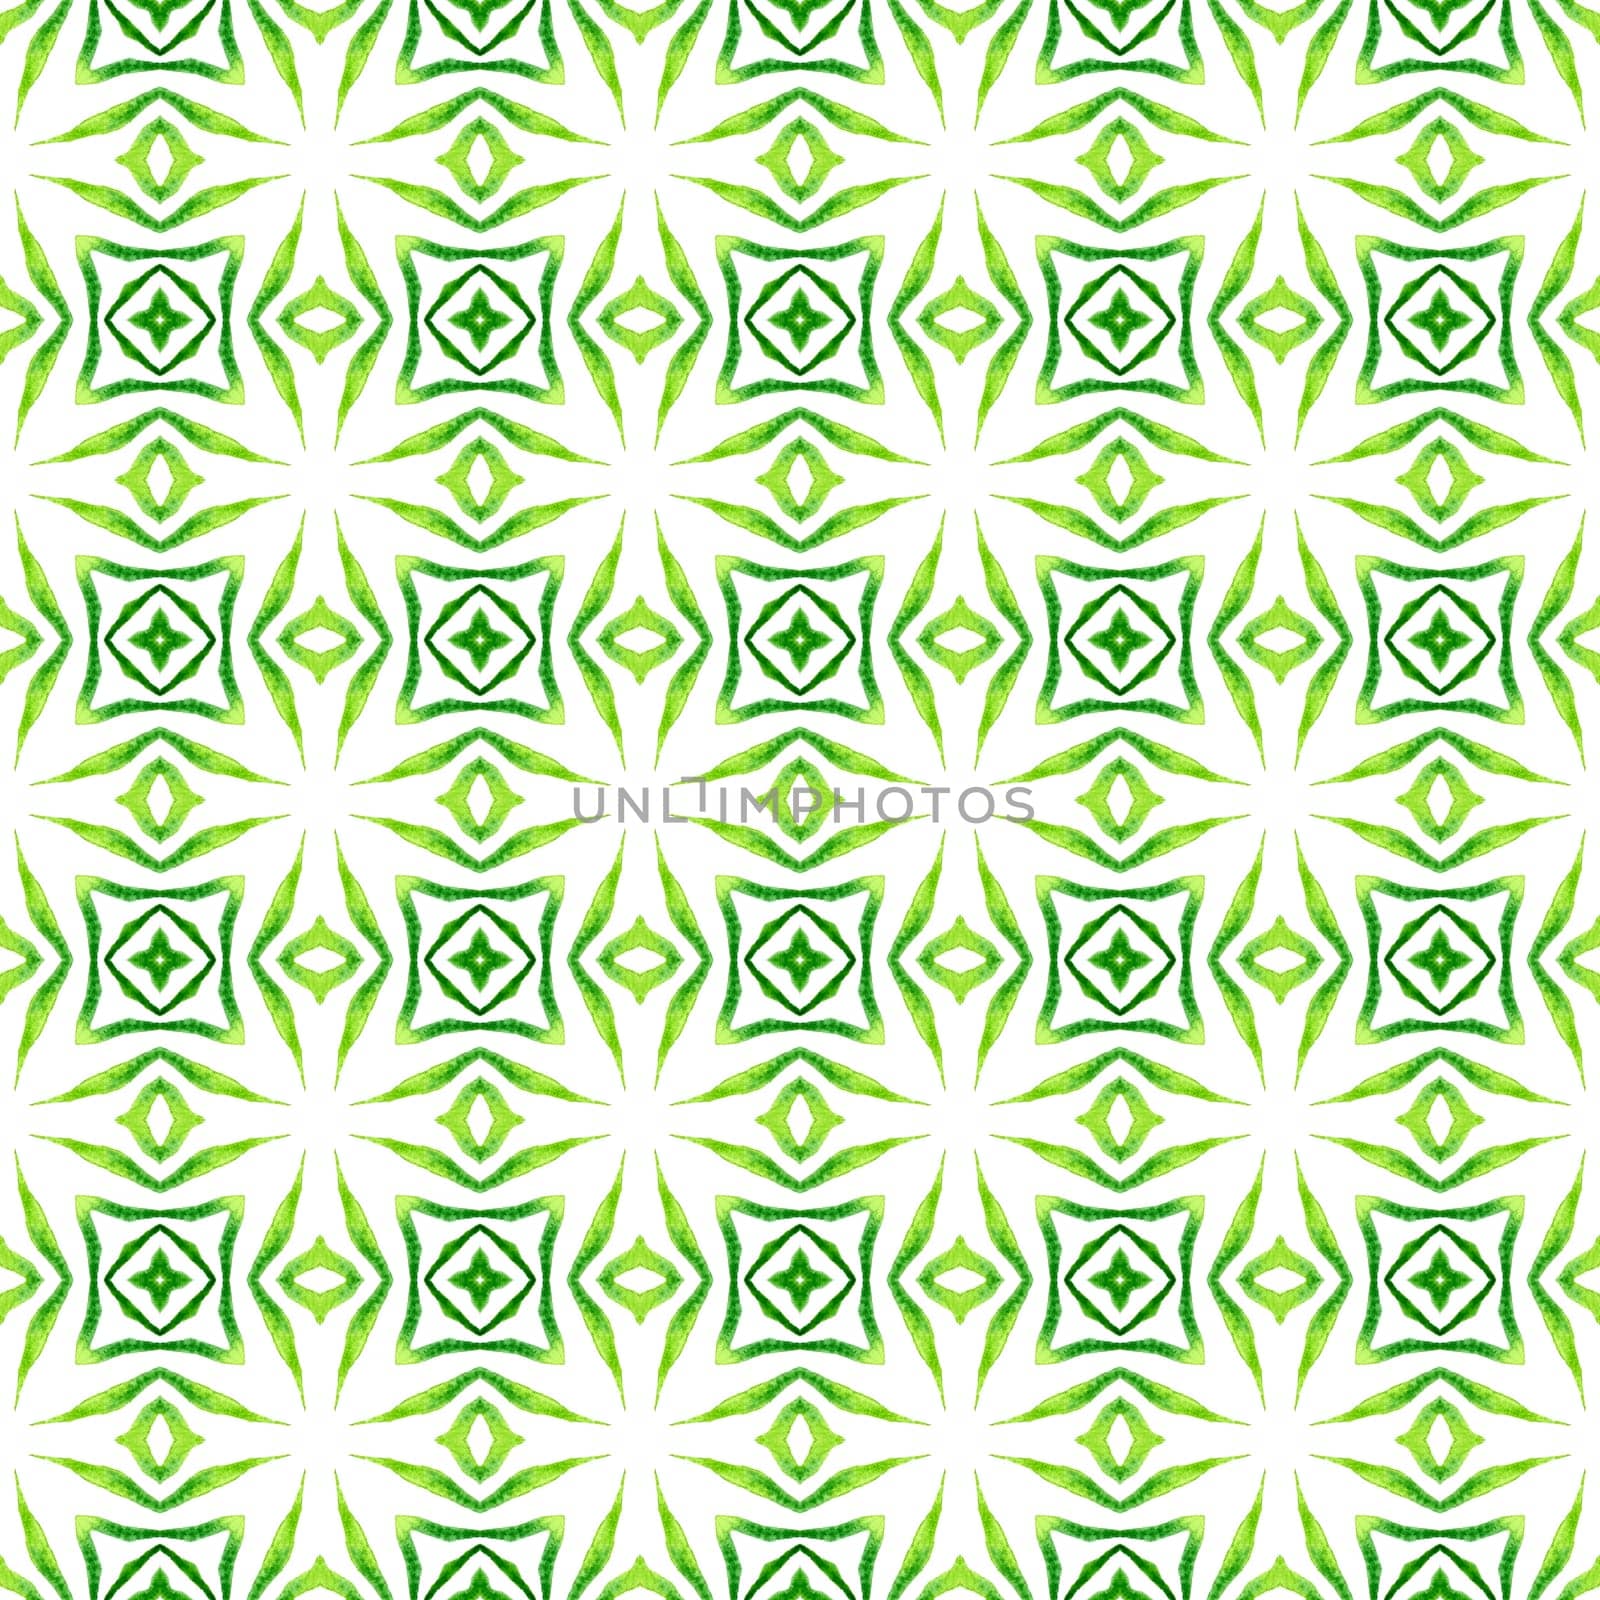 Chevron watercolor pattern. Green wondrous boho chic summer design. Textile ready ideal print, swimwear fabric, wallpaper, wrapping. Green geometric chevron watercolor border.